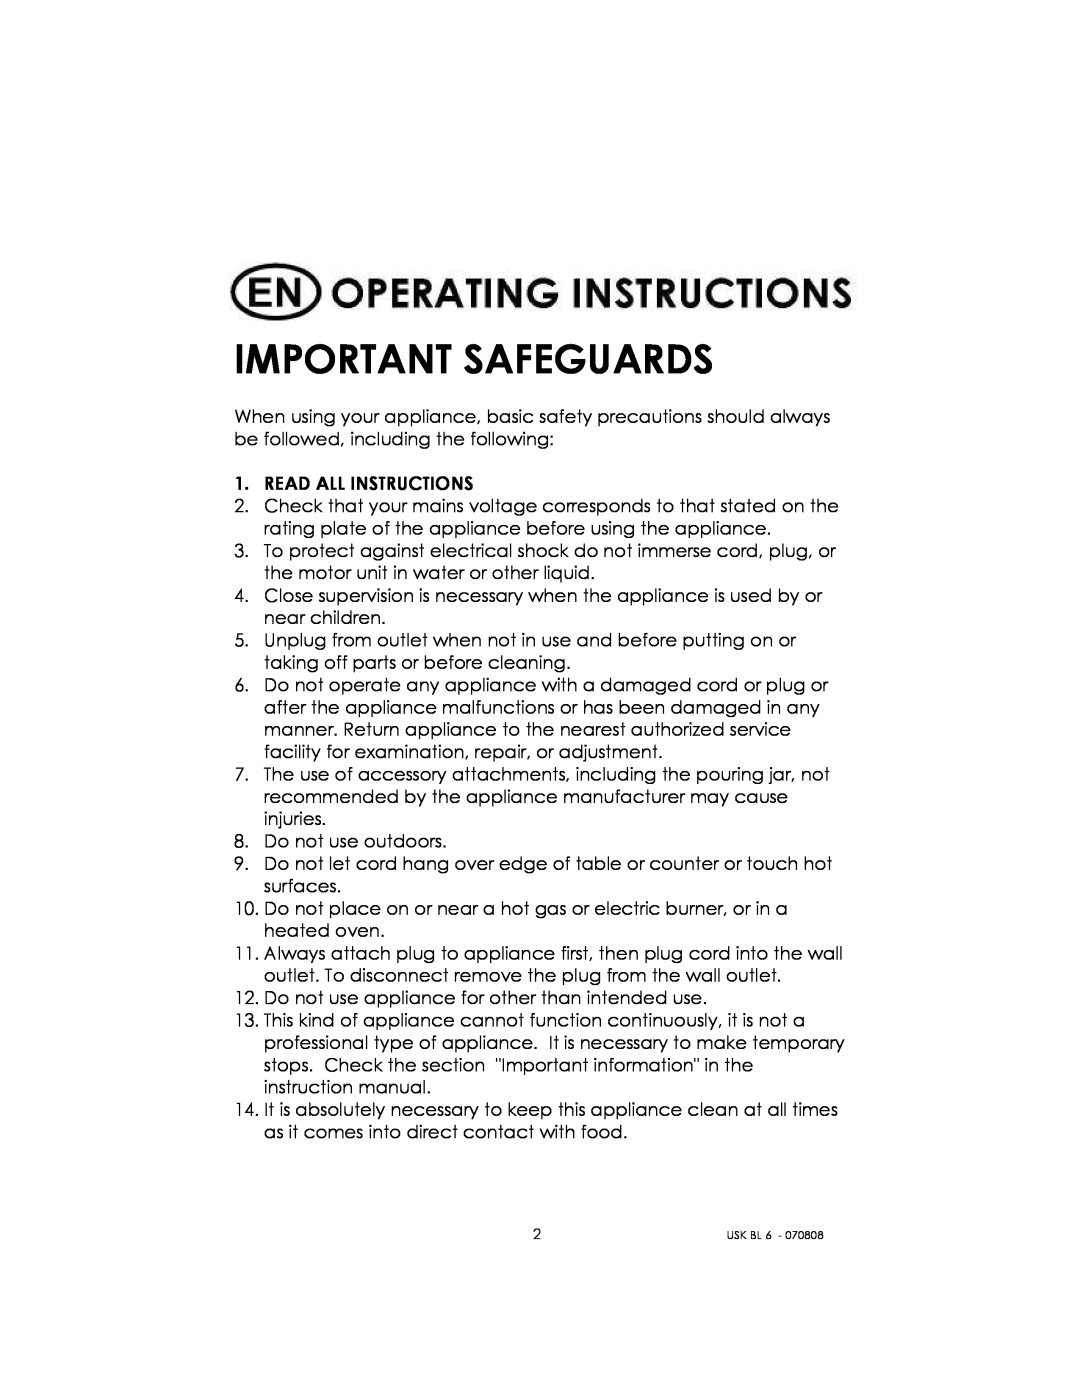 Kalorik USK BL 6 manual Important Safeguards 